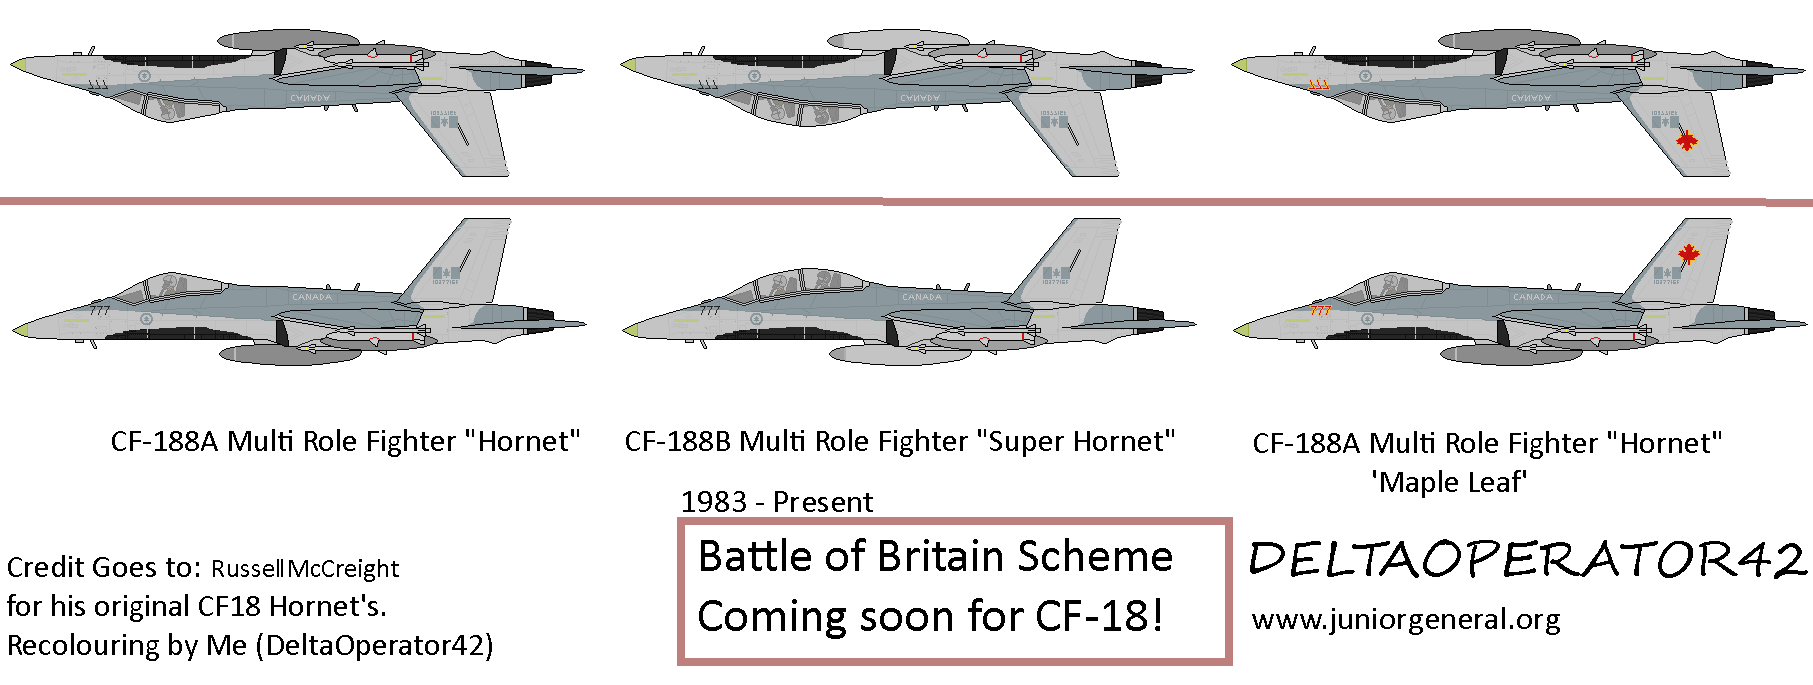 Canadian CF-188B Hornet